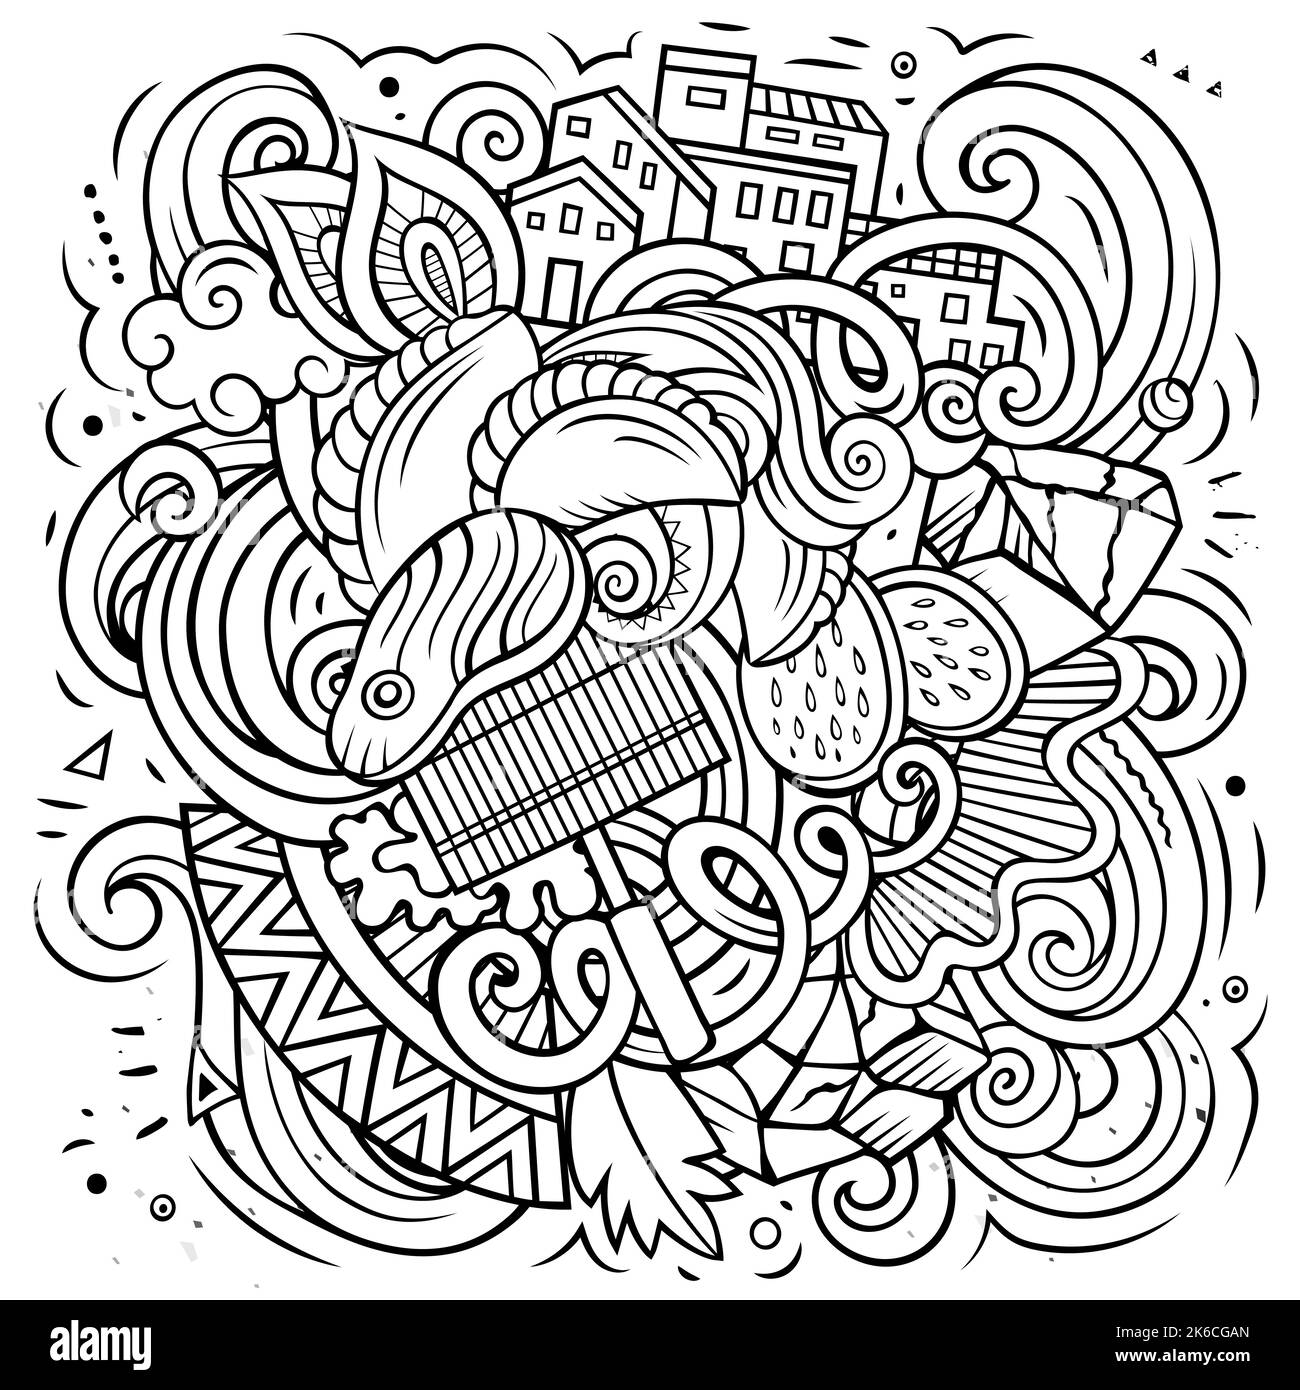 Argentina hand drawn cartoon doodles illustration Stock Vector